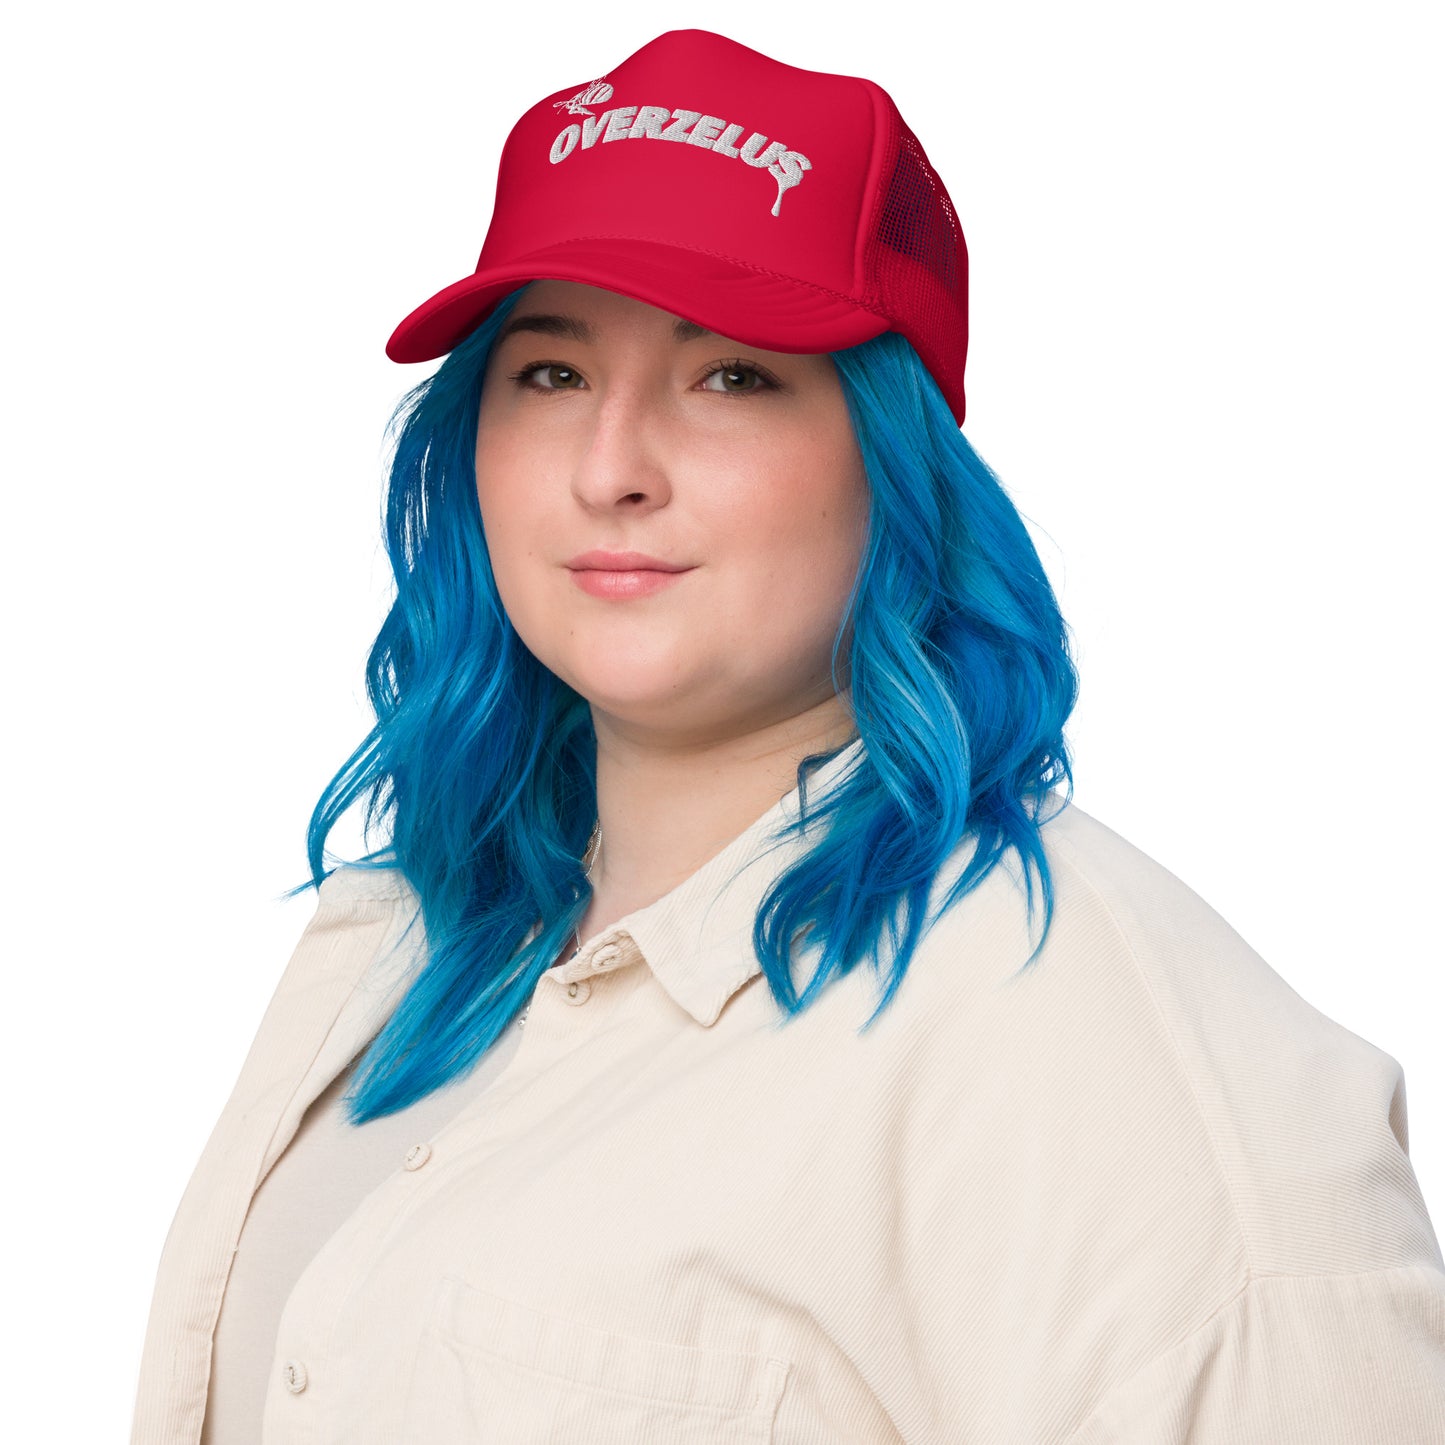 Embroidered Overzelus Trucker Hat